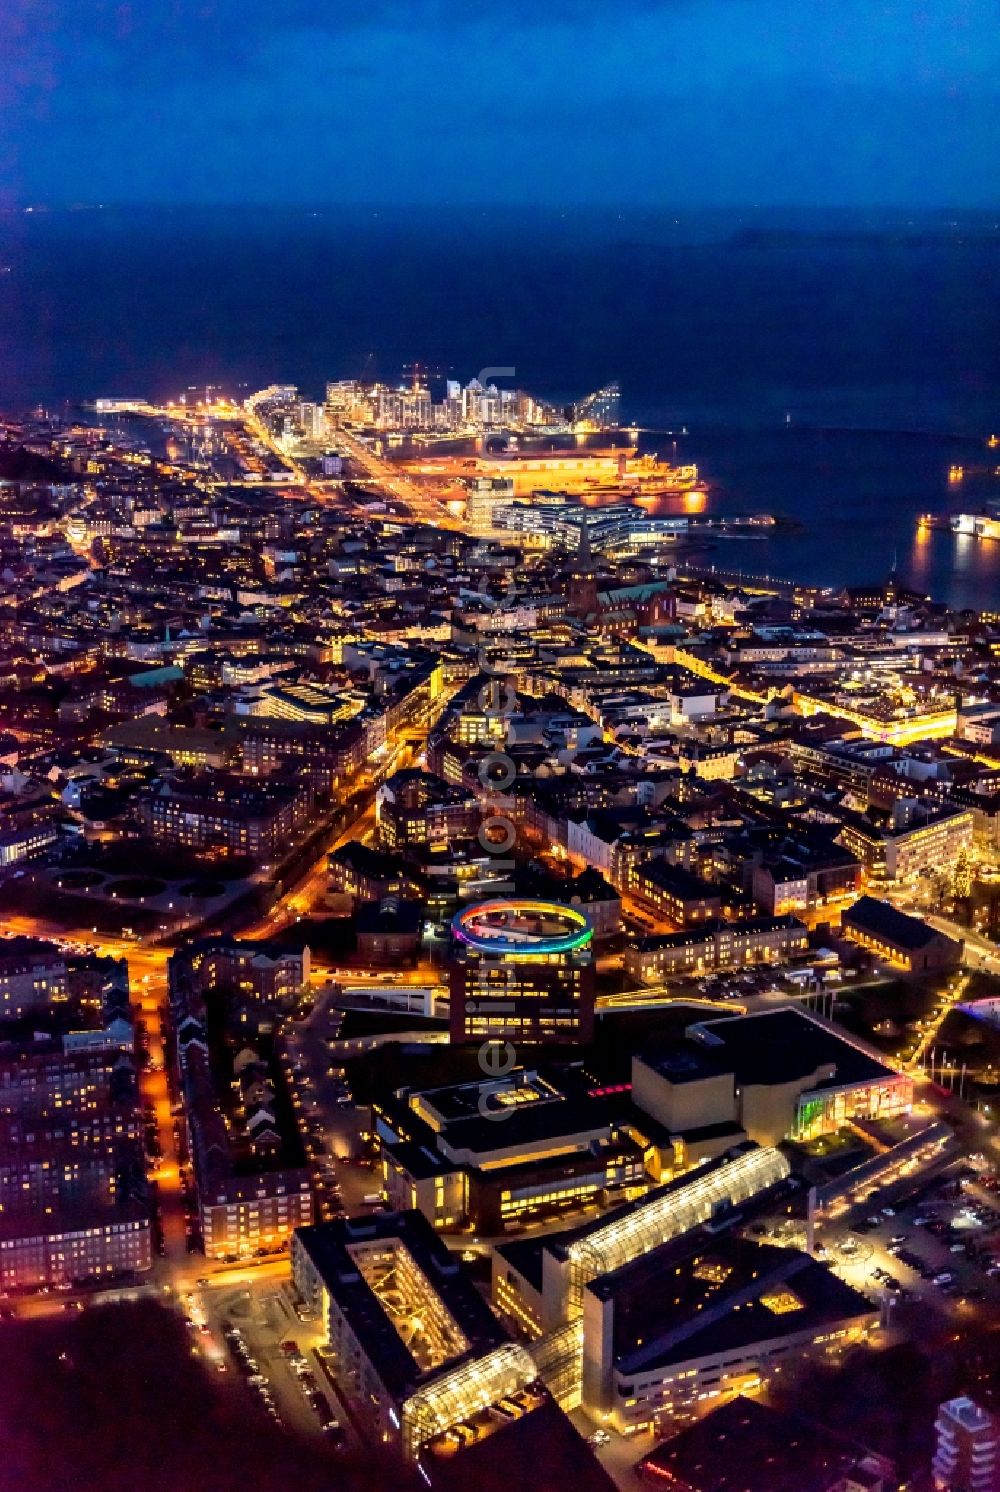 Aerial photograph at night Kopenhagen - Night lighting the city center in the downtown area in Copenhagen in Region Hovedstaden, Denmark